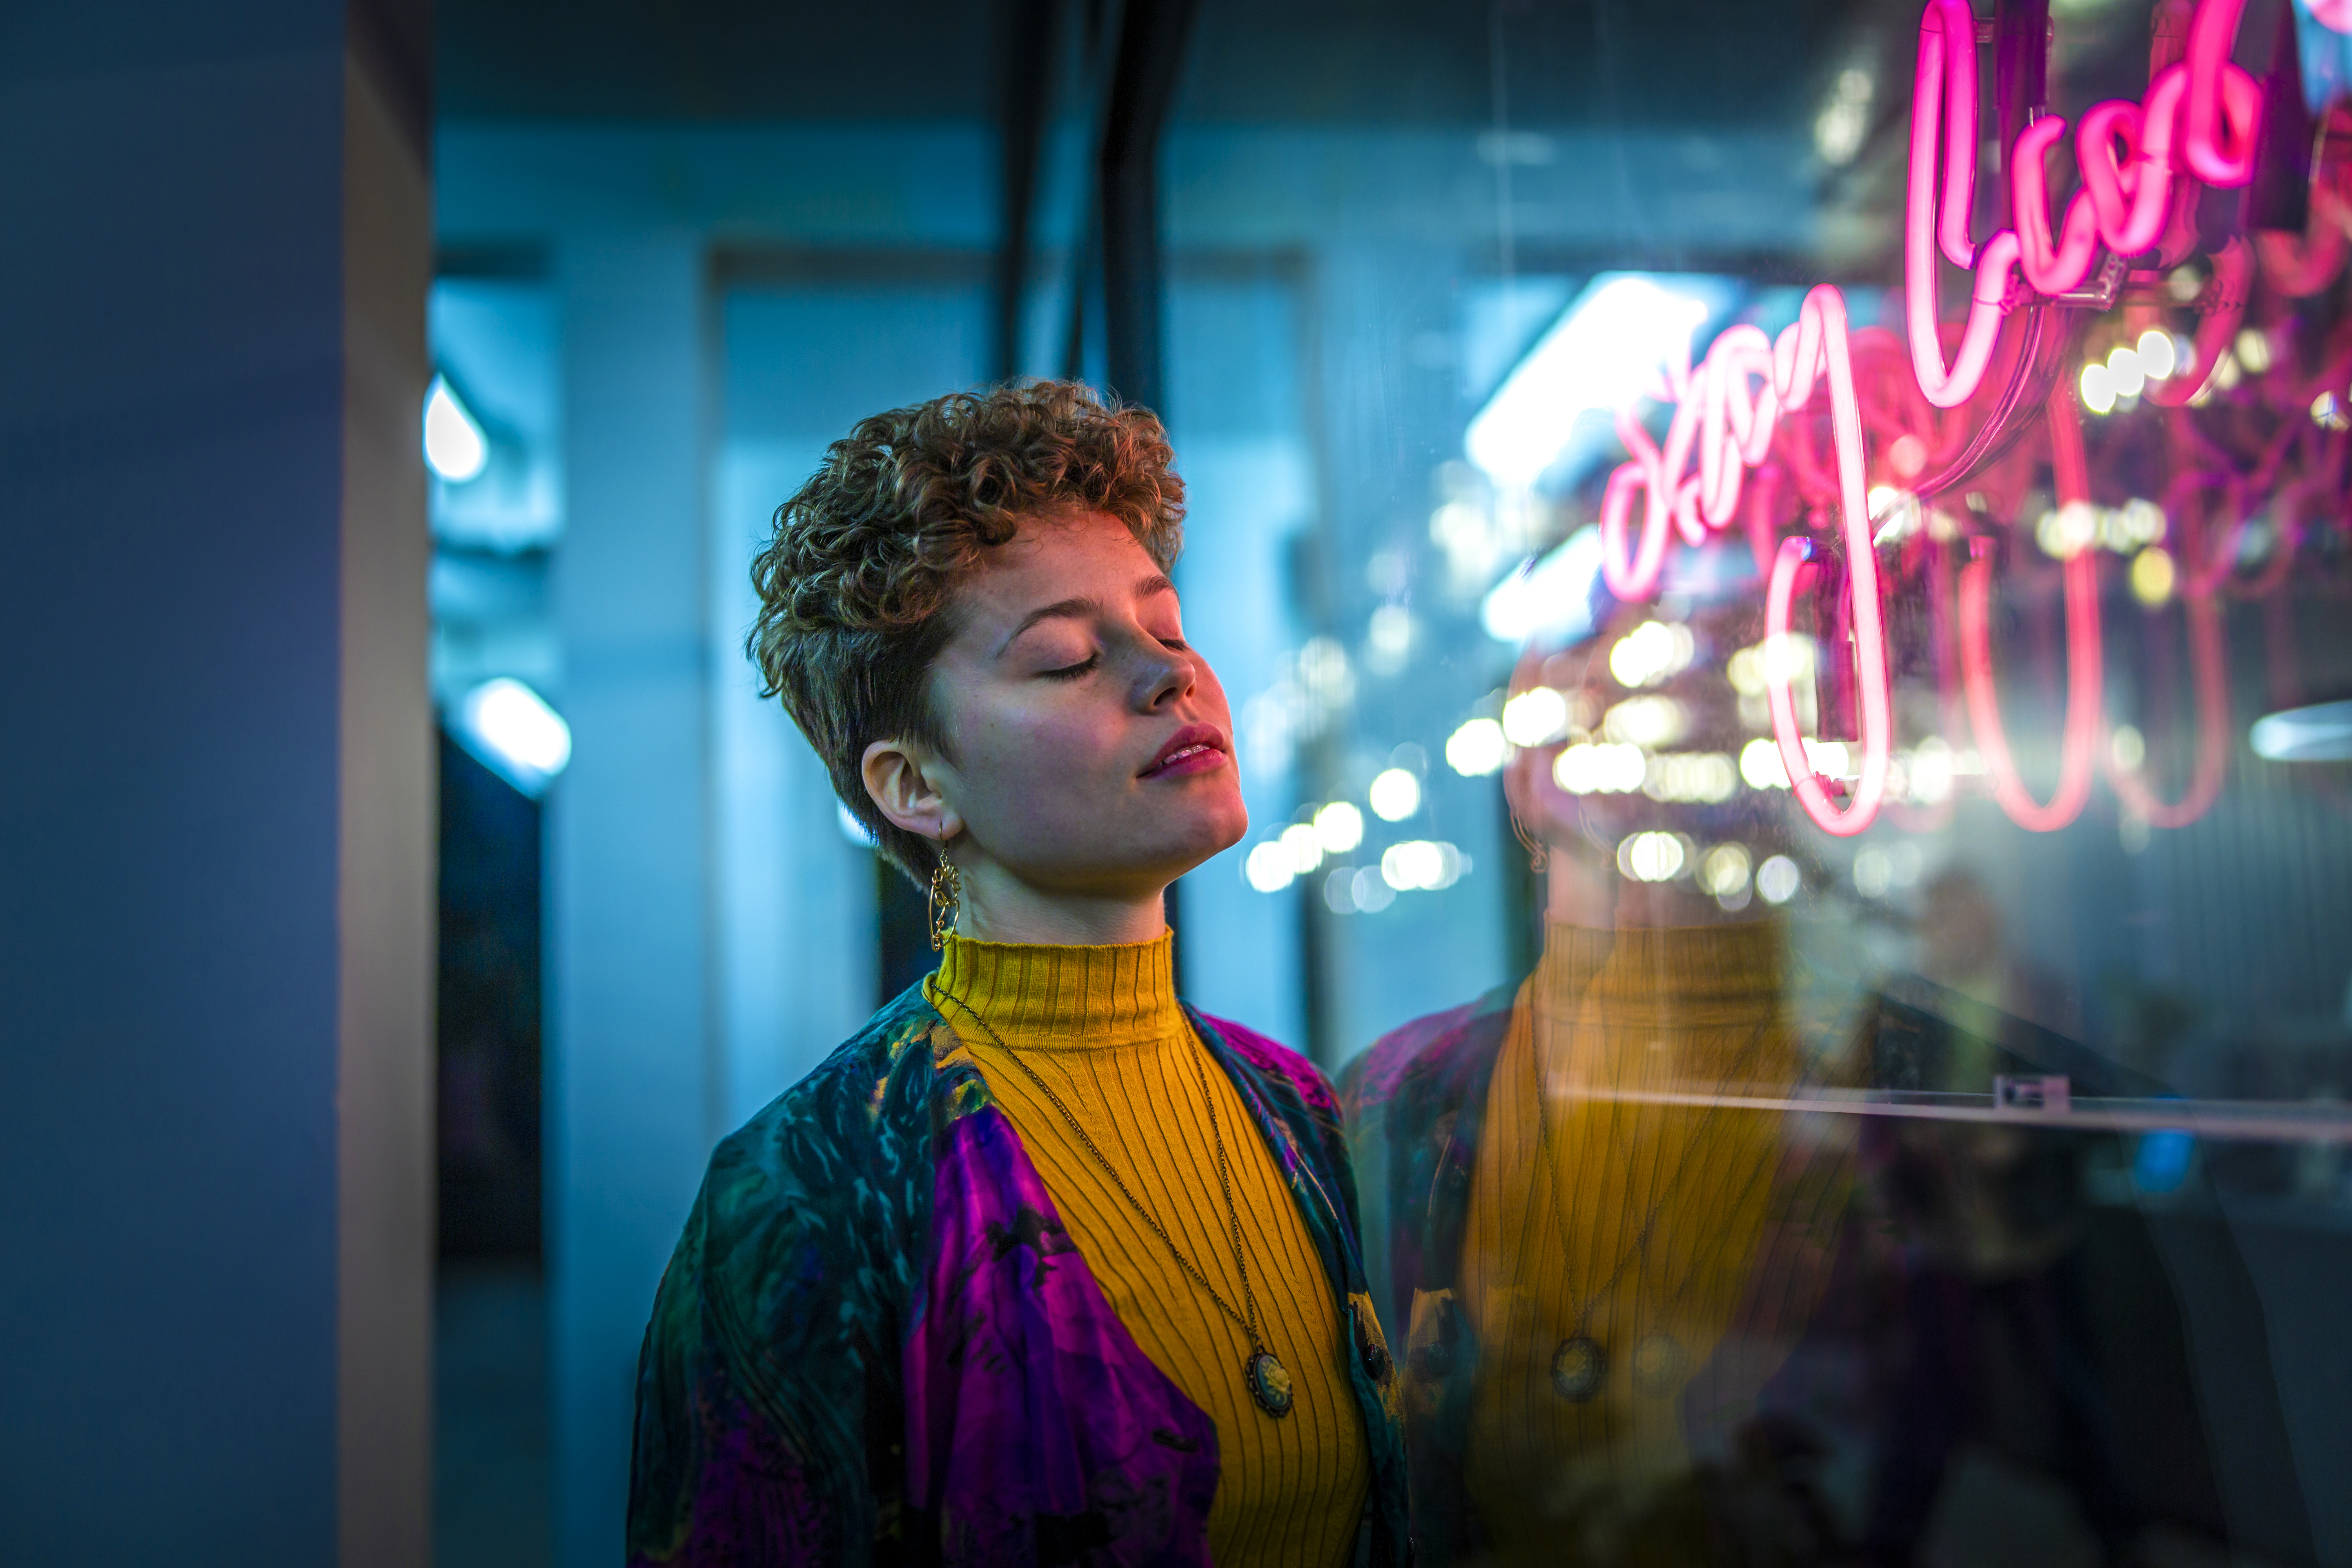 10 low light portrait tips: Take beautifully neon-lit photographs